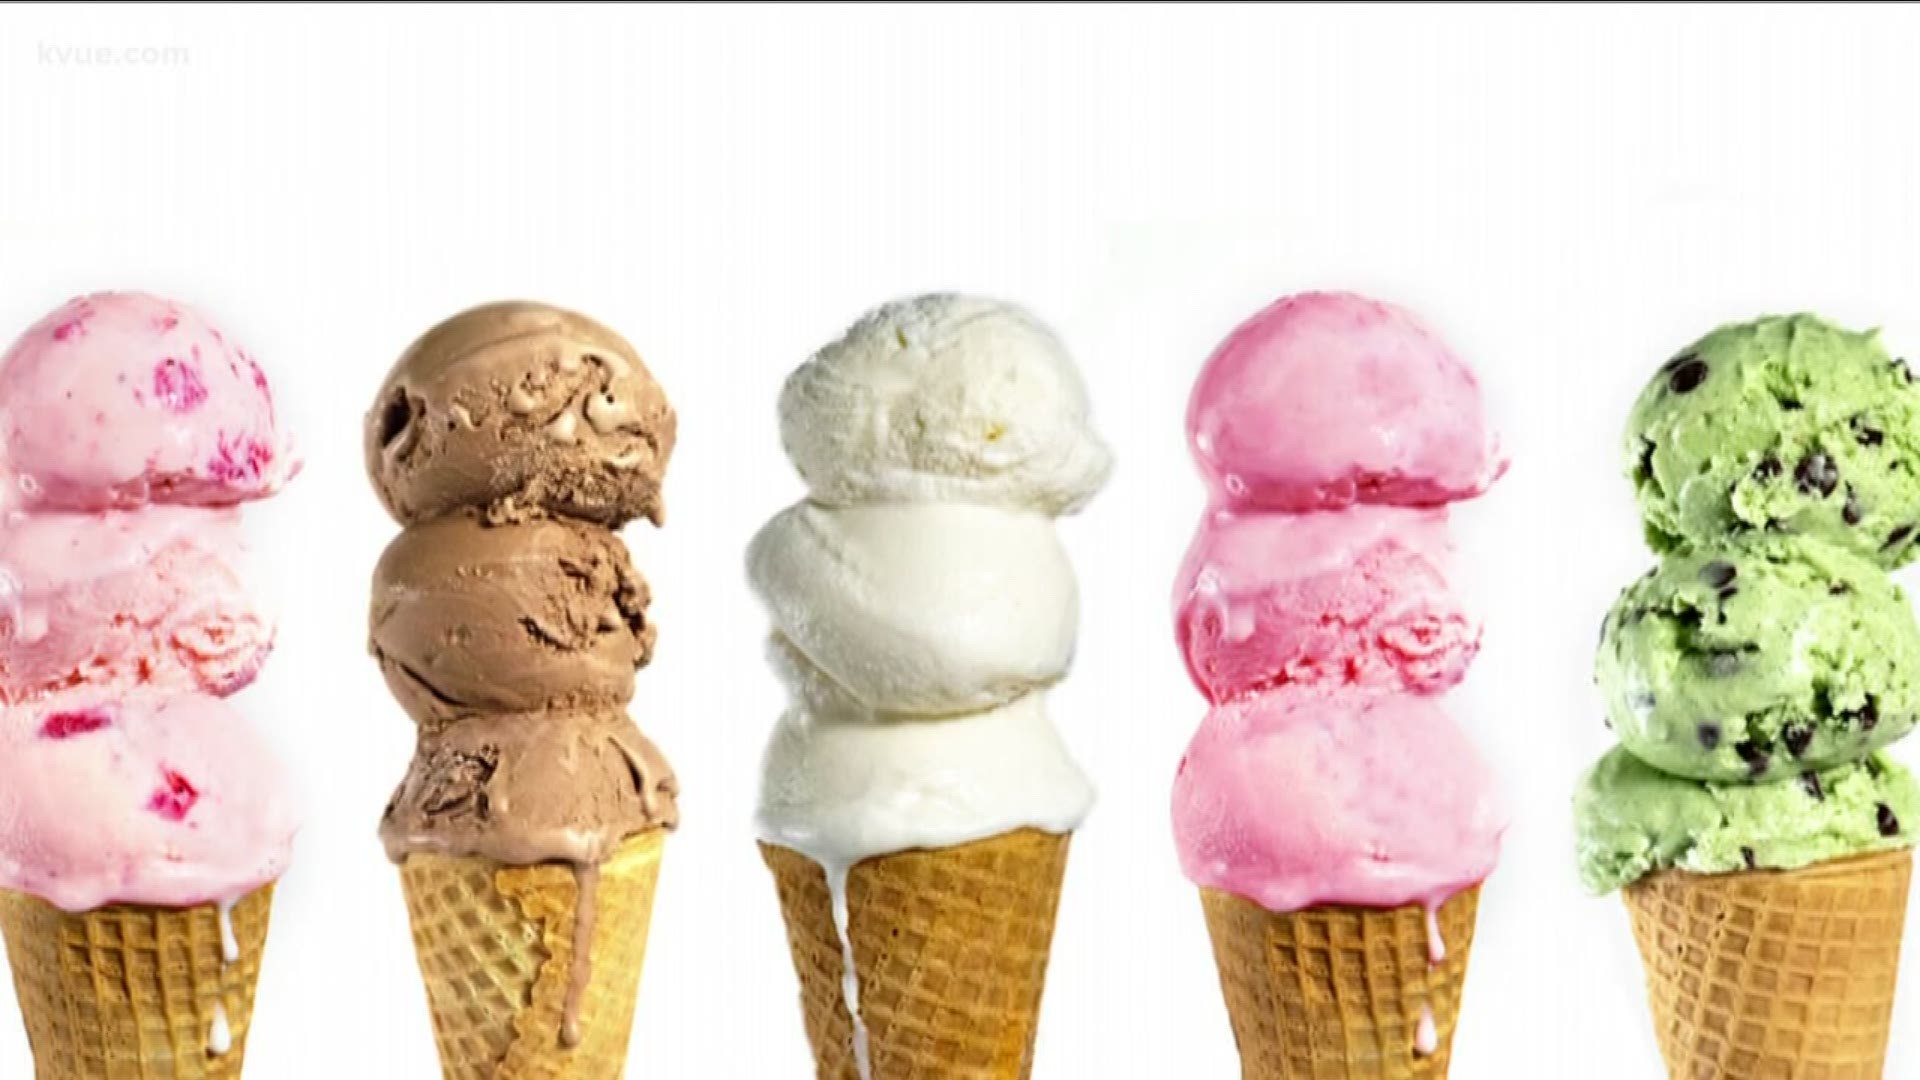 Ice Cream with hidden veggies sold at H-E-Bs across Texas